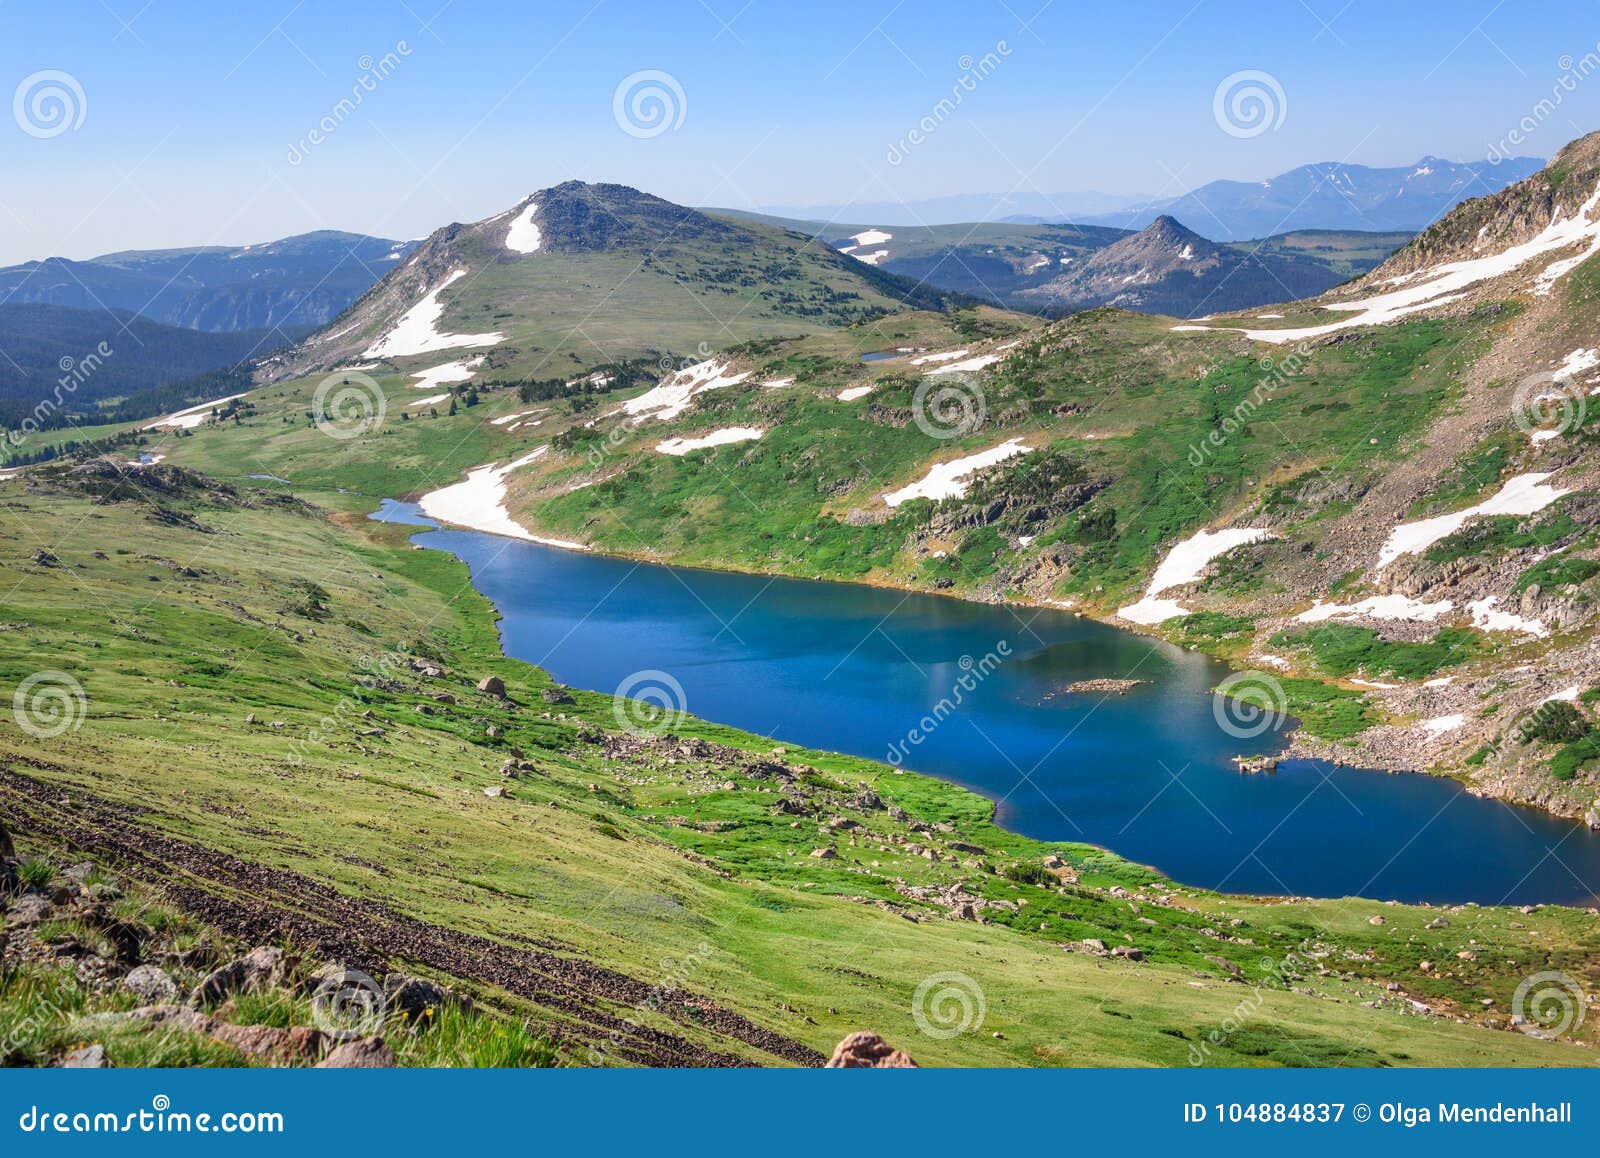 beartooth pass - gardner lake. peaks of beartooth mountains, shoshone national forest, wyoming, usa.